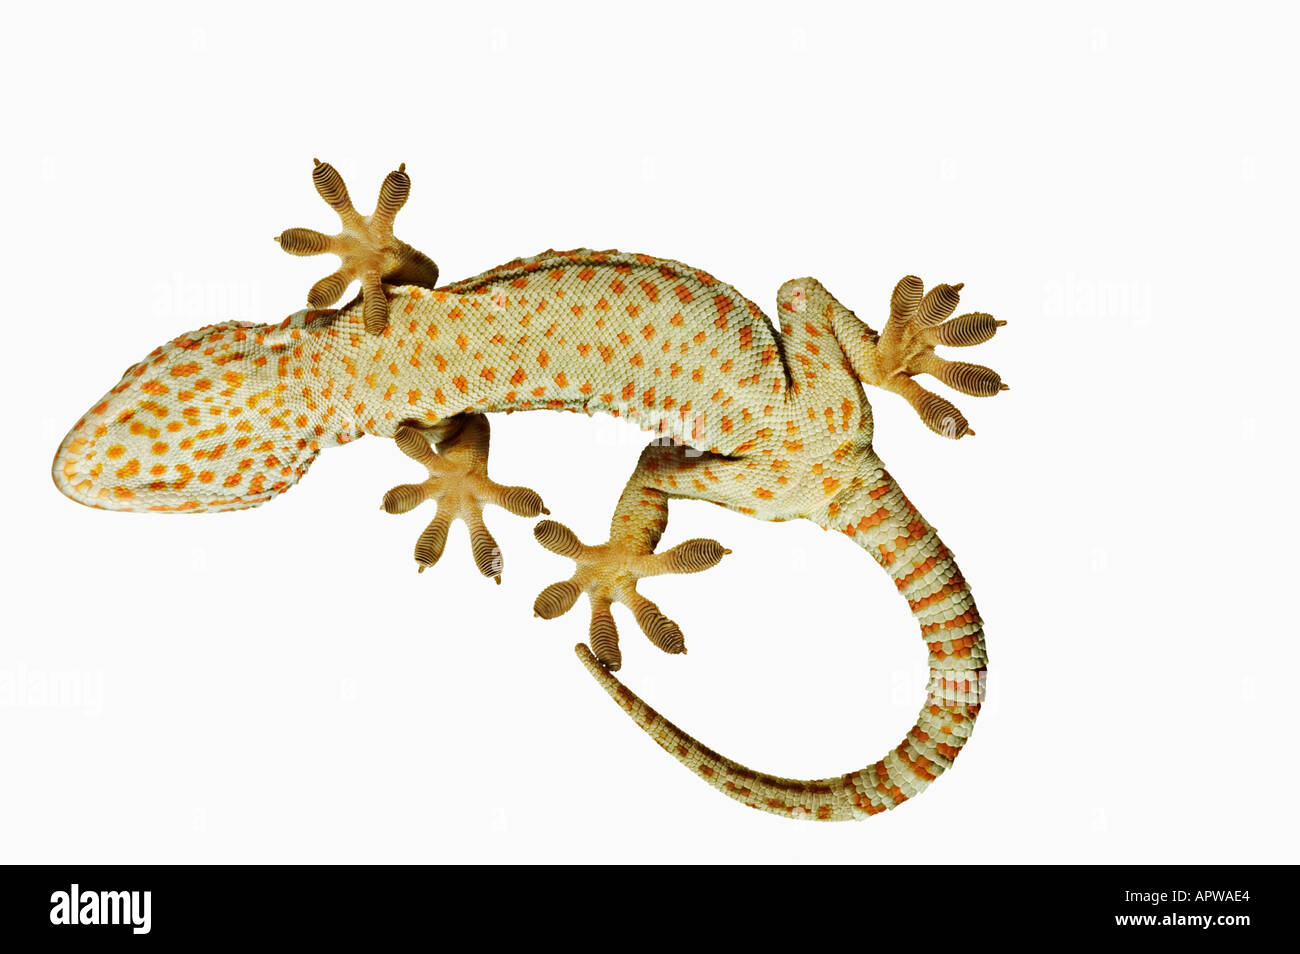 https://c8.alamy.com/comp/APWAE4/tokay-gecko-gekko-gecko-view-from-below-showing-specially-adapted-APWAE4.jpg